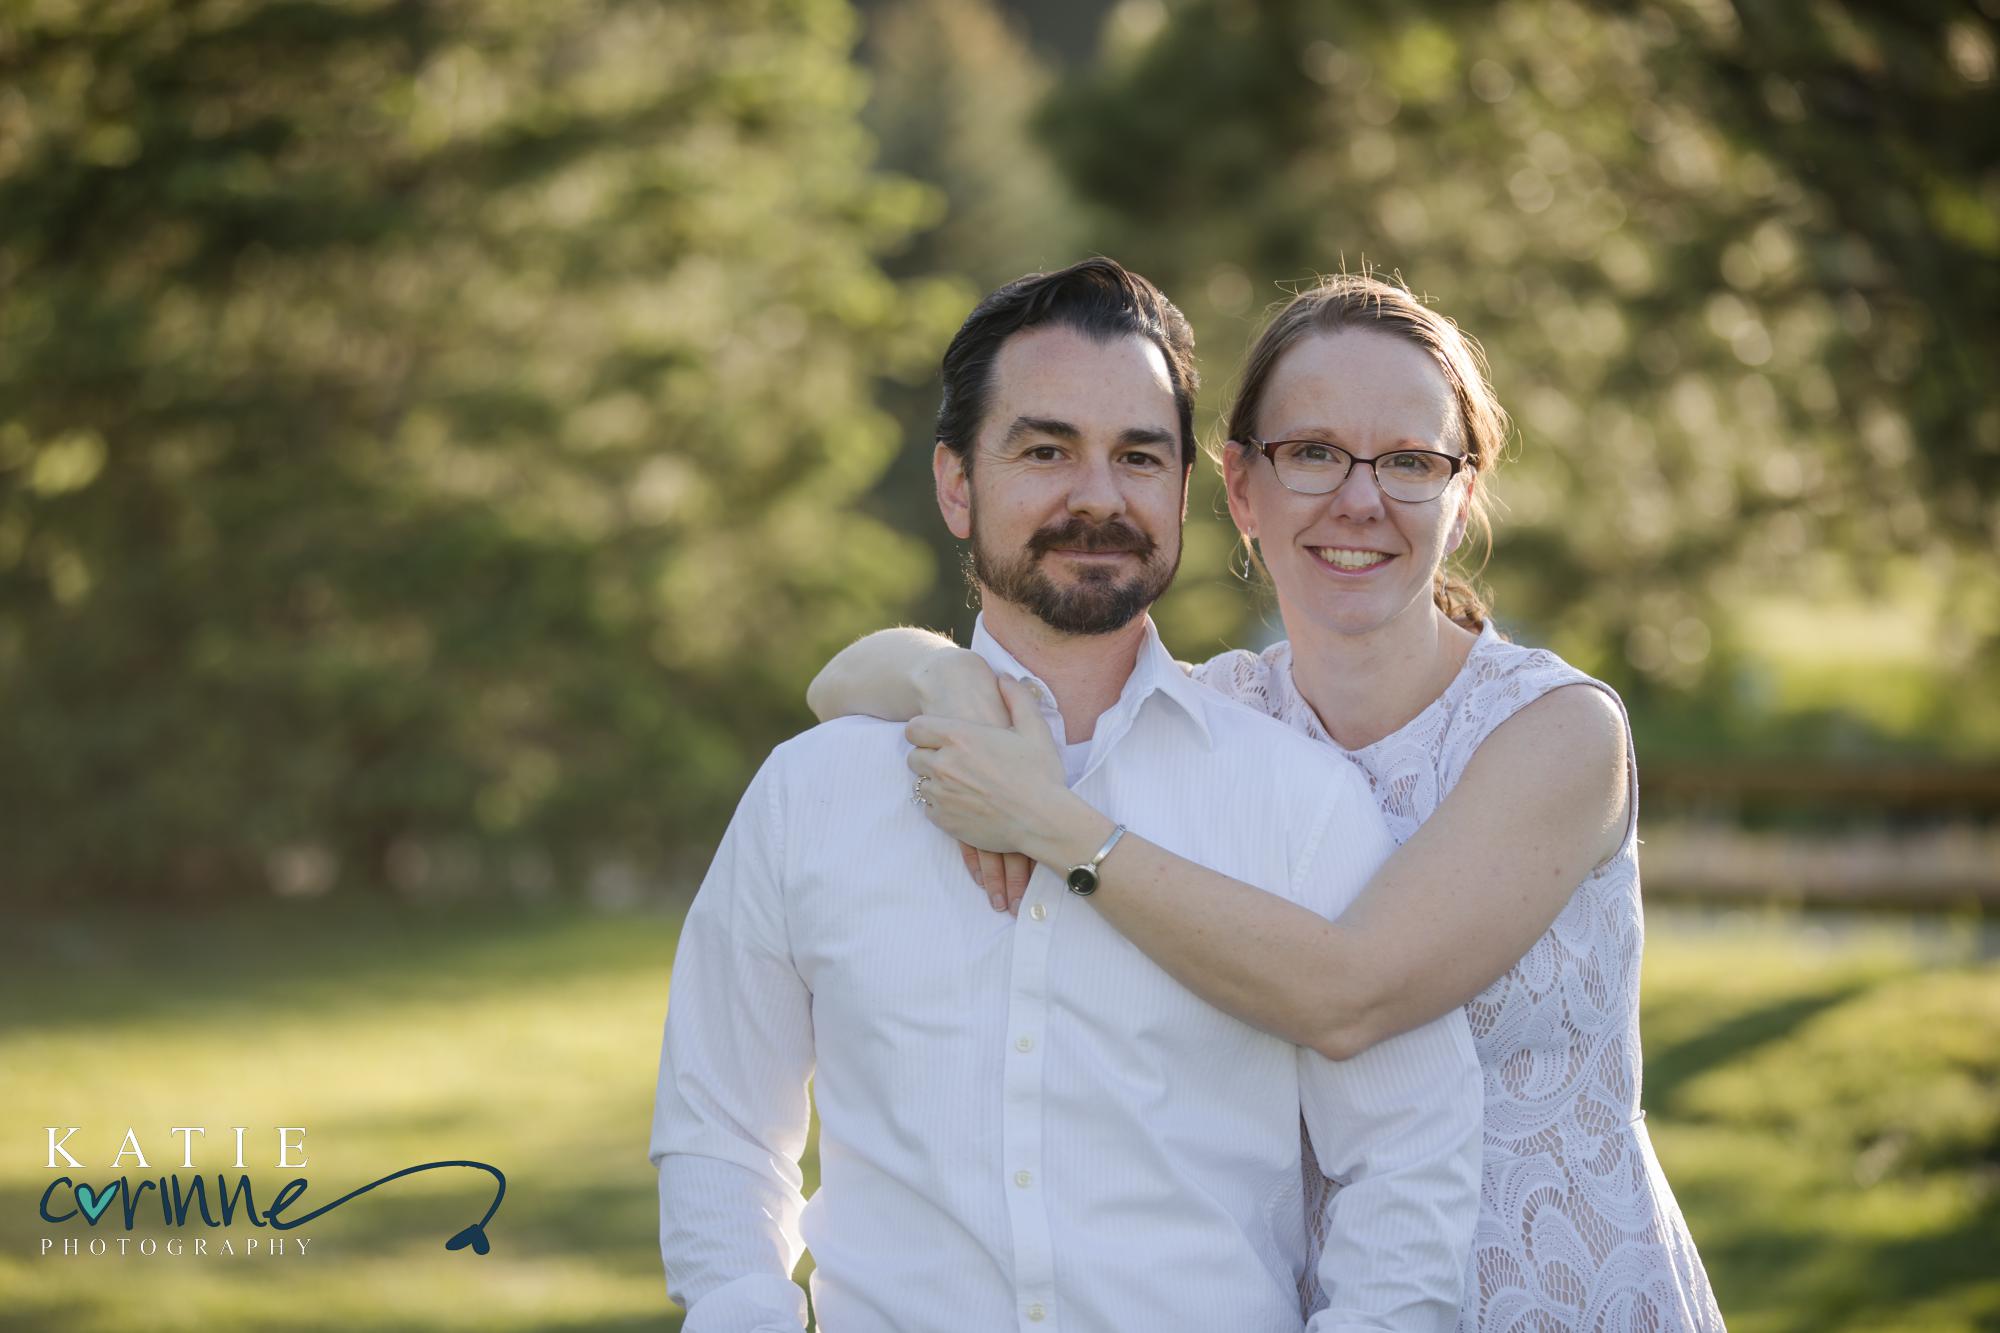 Colorado Springs couple pose for wedding photographer